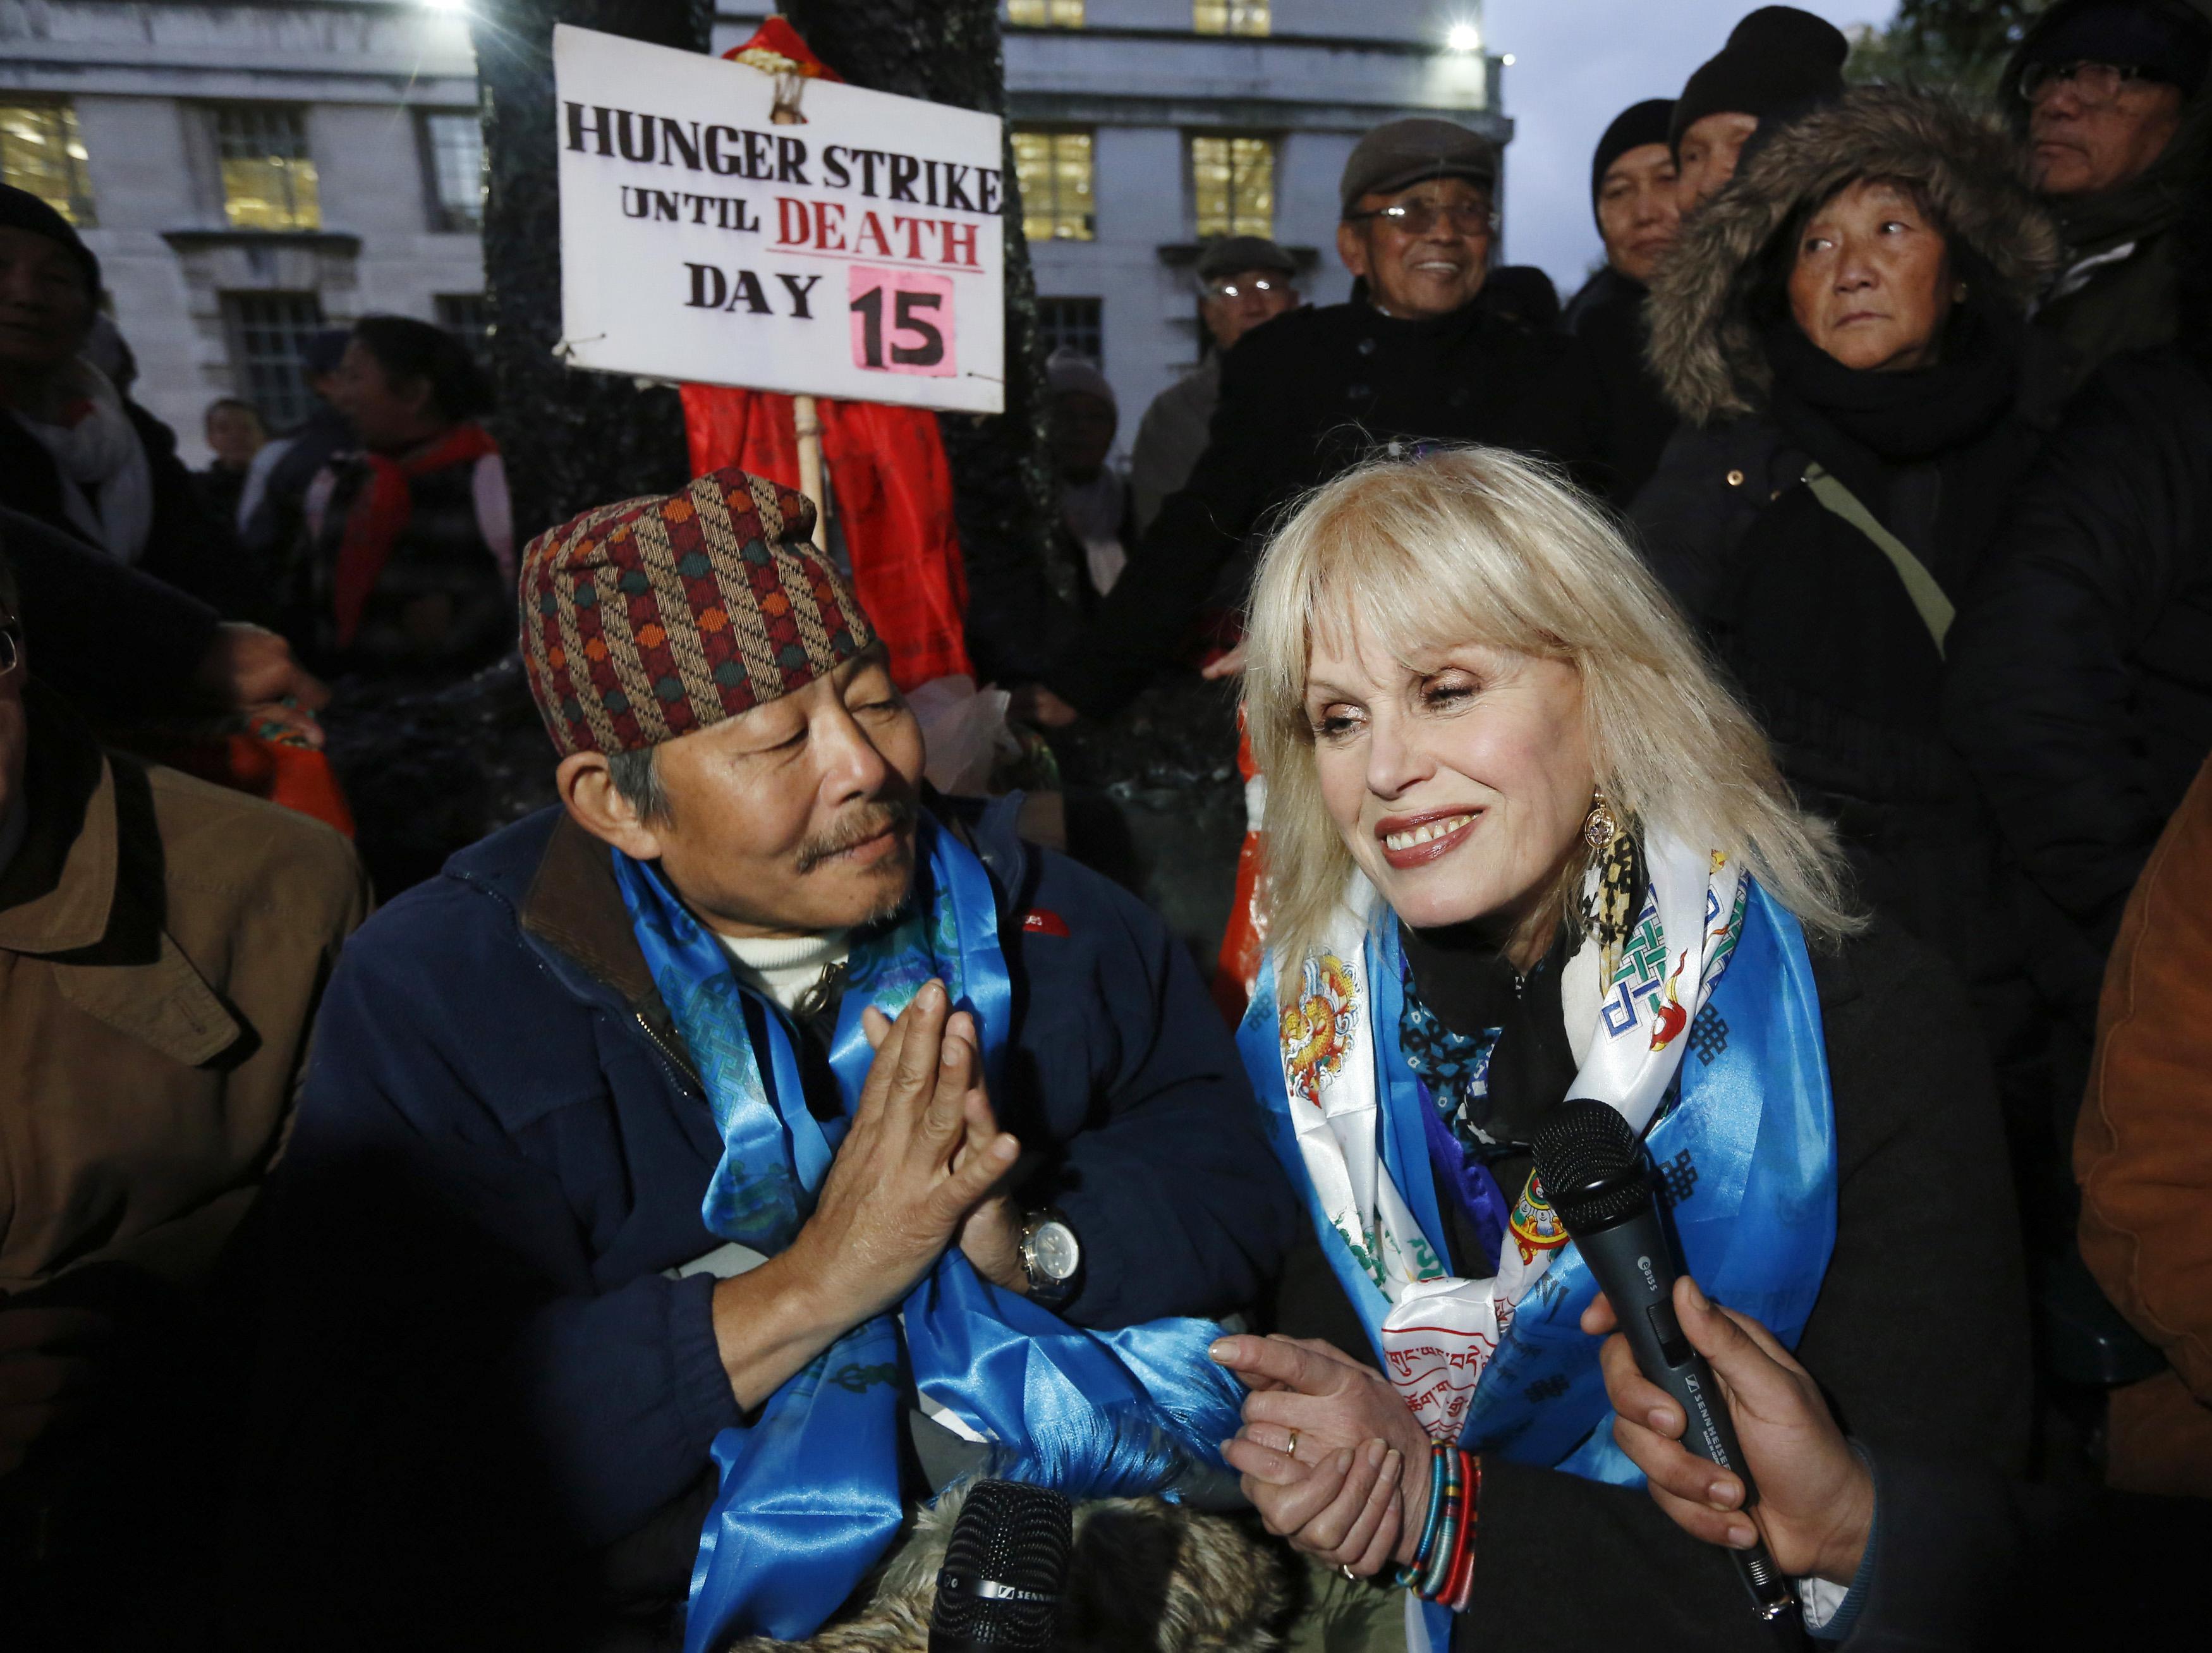 Former Gurkha Gyanraj Rai with actress and activist Joanna Lumley in London on Thursday. Photo: Reuters